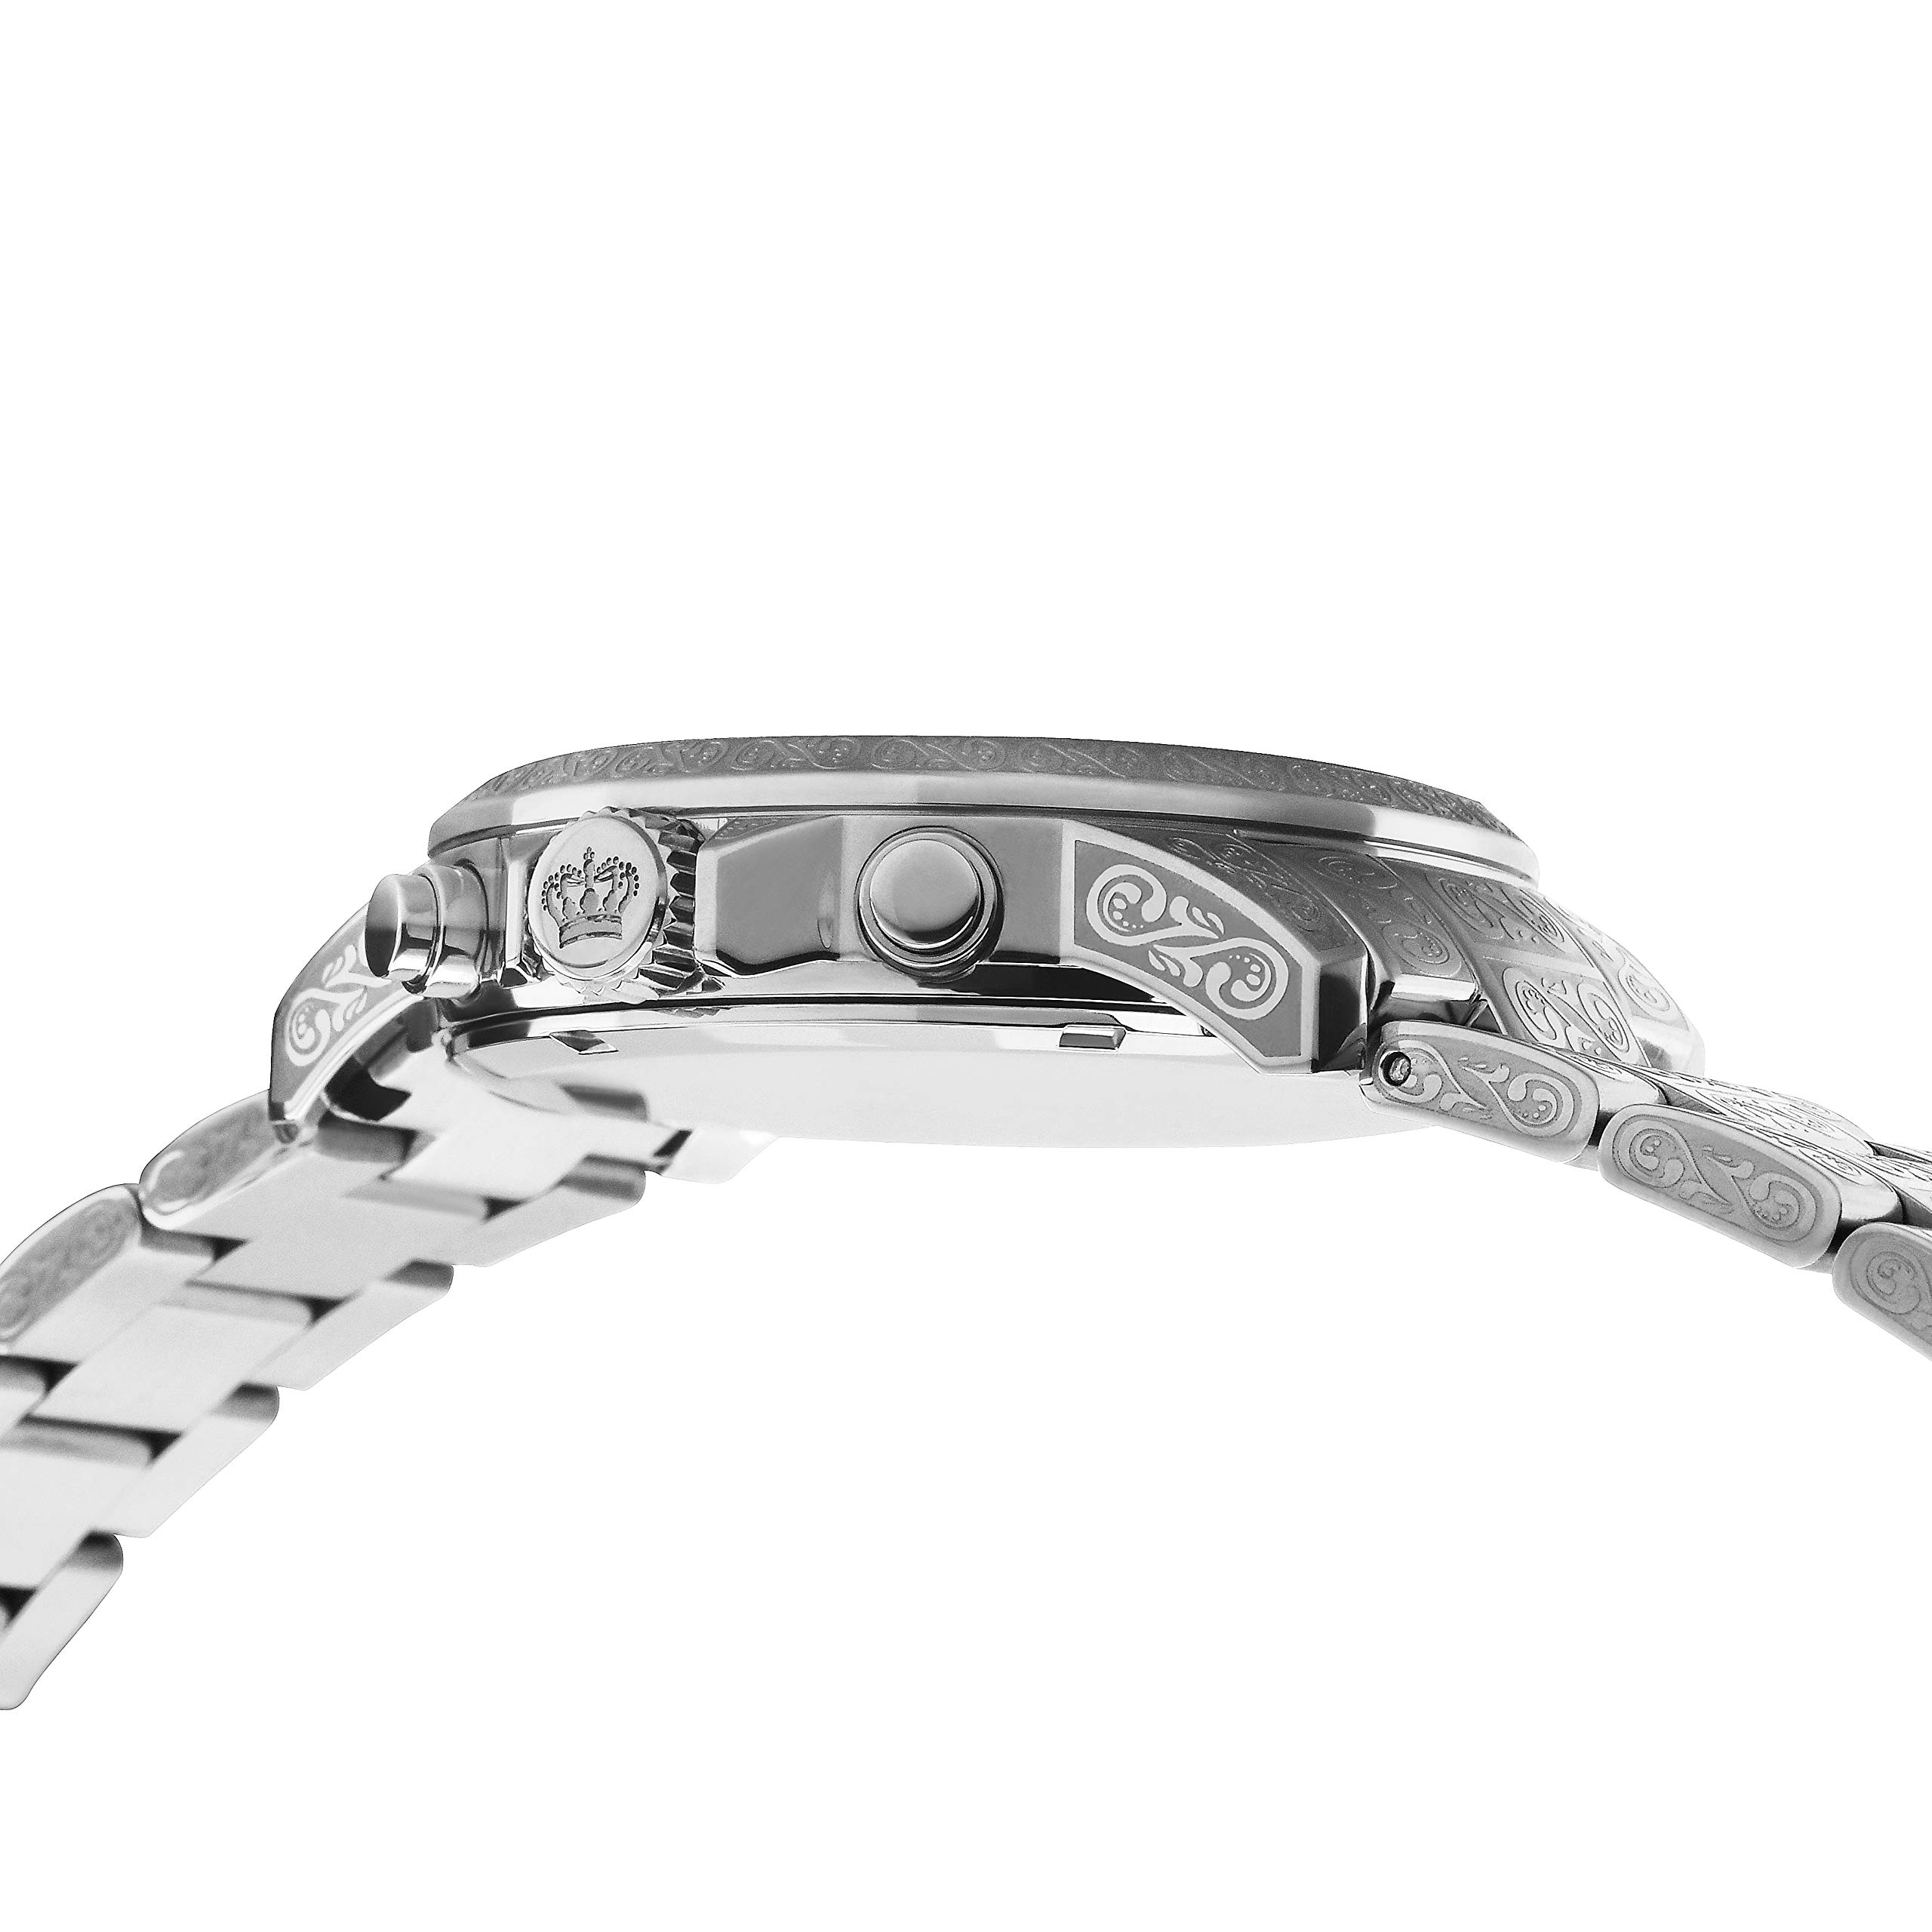 LOUIS XVI Herren-Armbanduhr Palais Royale Stahlband Silber Schwarz Karbon echte Diamanten Römische Zahlen Chronograph Analog Quarz Edelstahl 1019